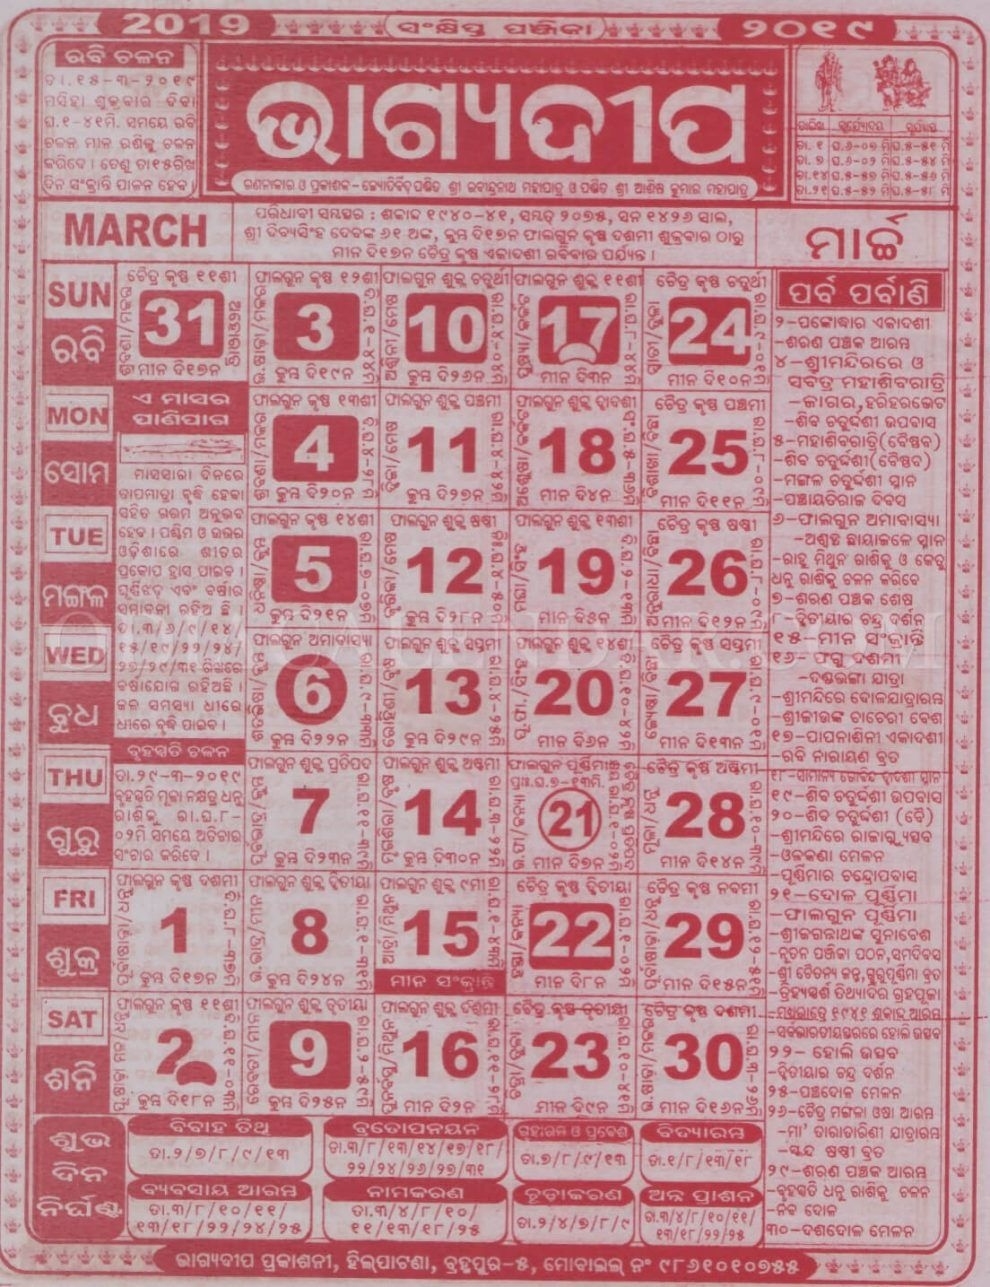 Bhagyadipa Odia Calendar 2020 | Calendar For Planning Odia Calendar 2021 July Bhagya Deepa